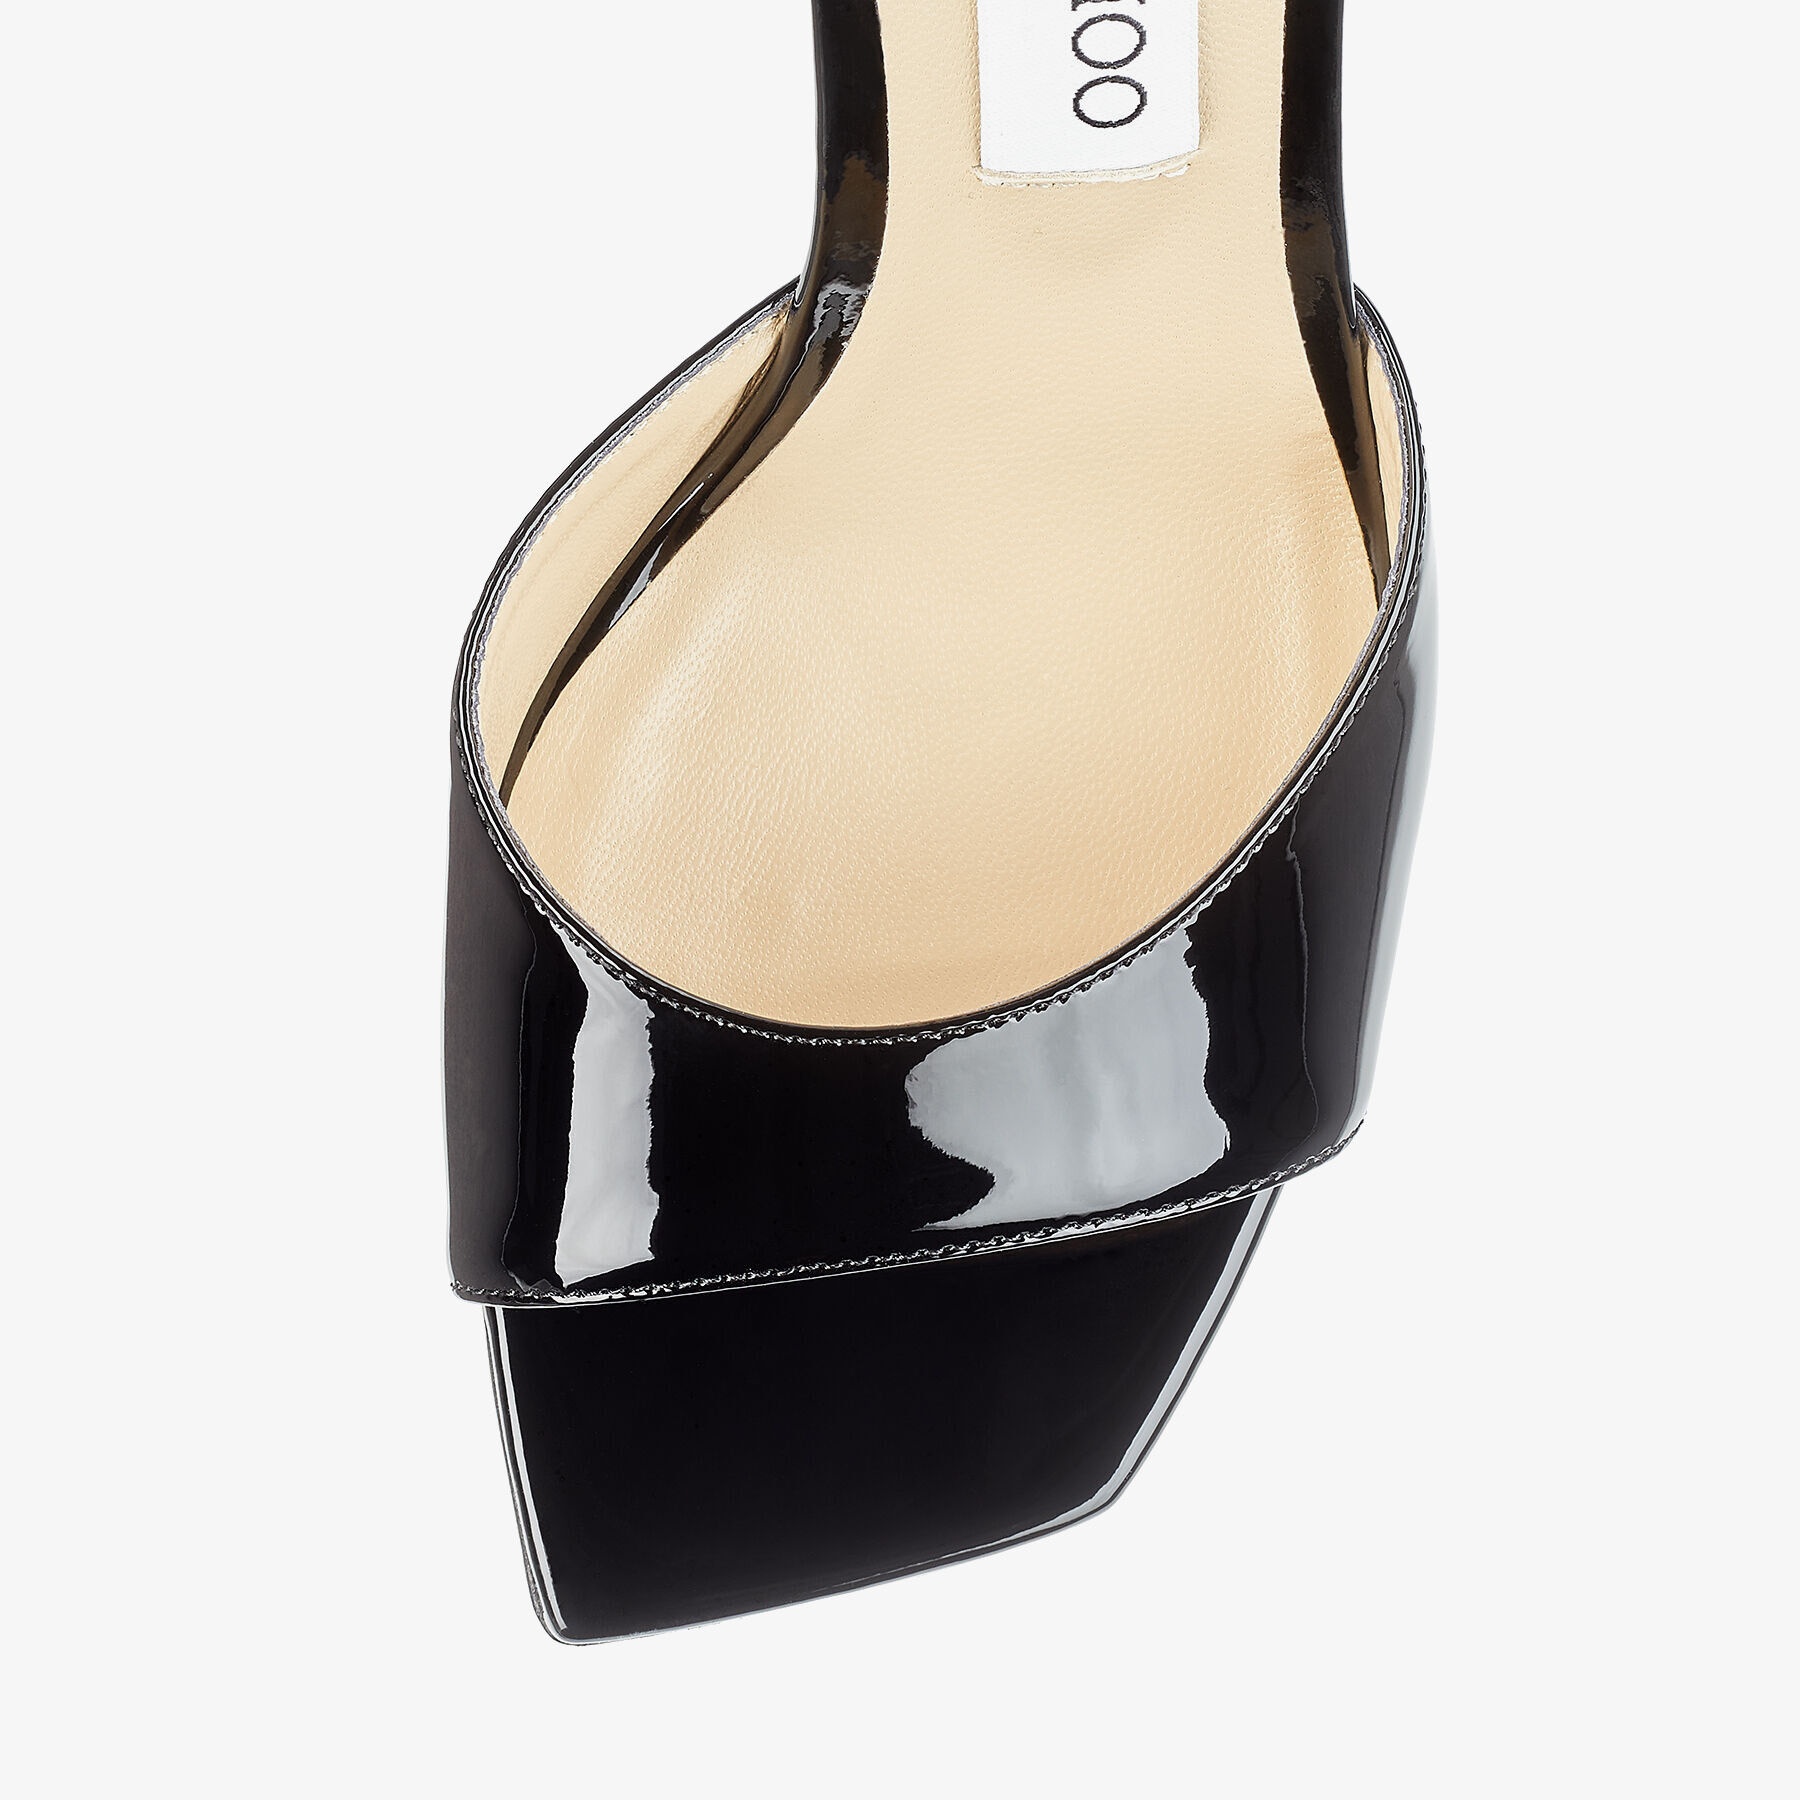 Brien 110
Black Patent Leather Wedge Sandals - 4